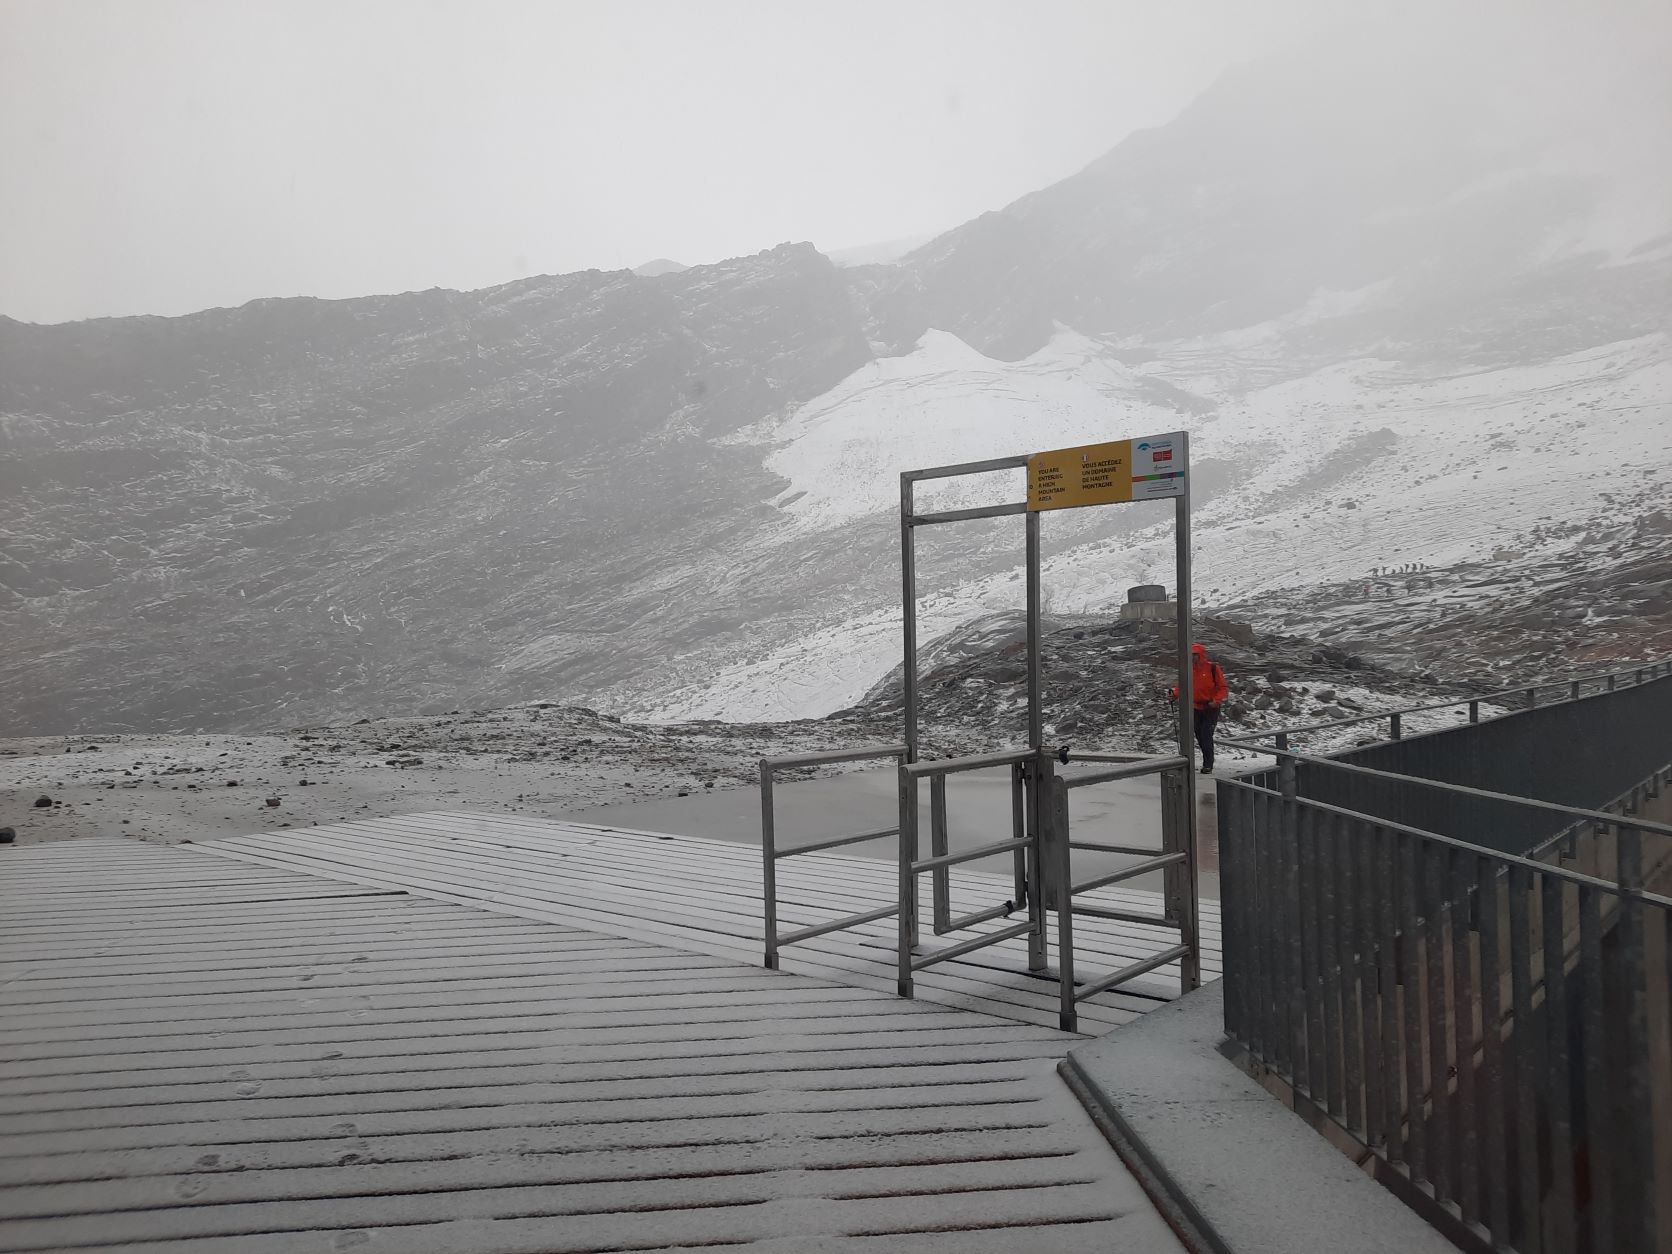 Alpes:Gran Paradiso(4061 m)-Capanna Gnifetti (3647m)-Capanna Margherita(4550m)